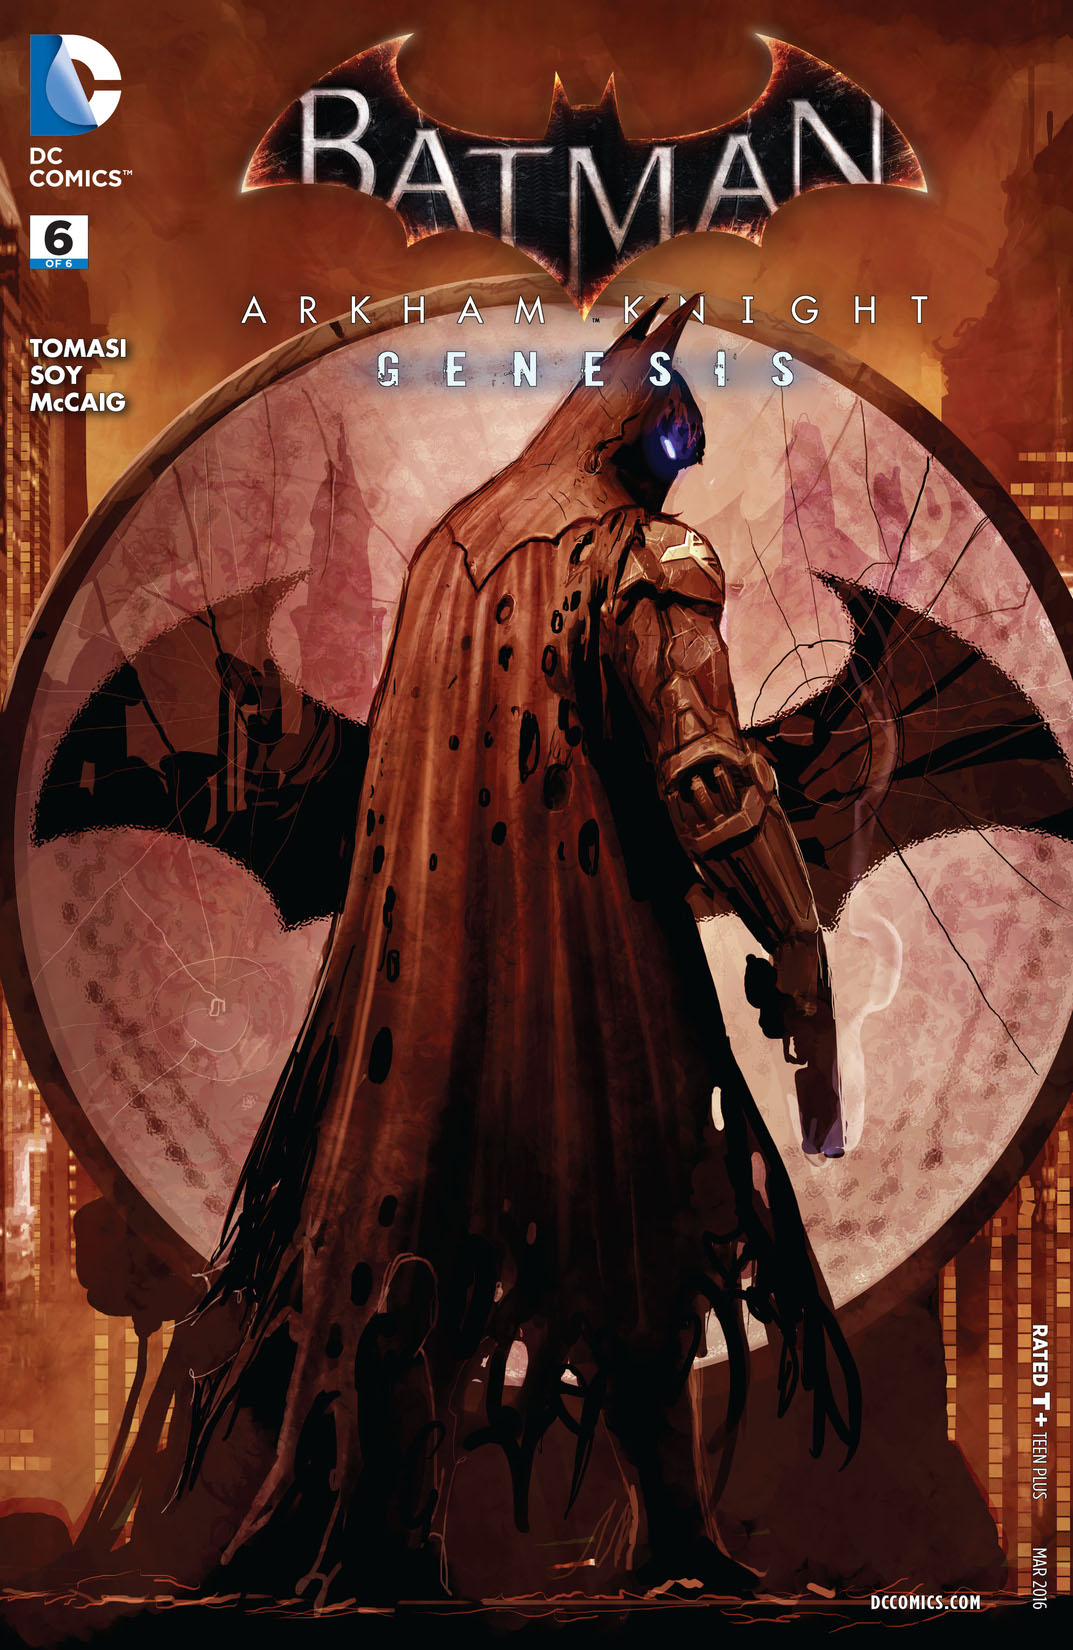 Batman: Arkham Knight Genesis #6 preview images